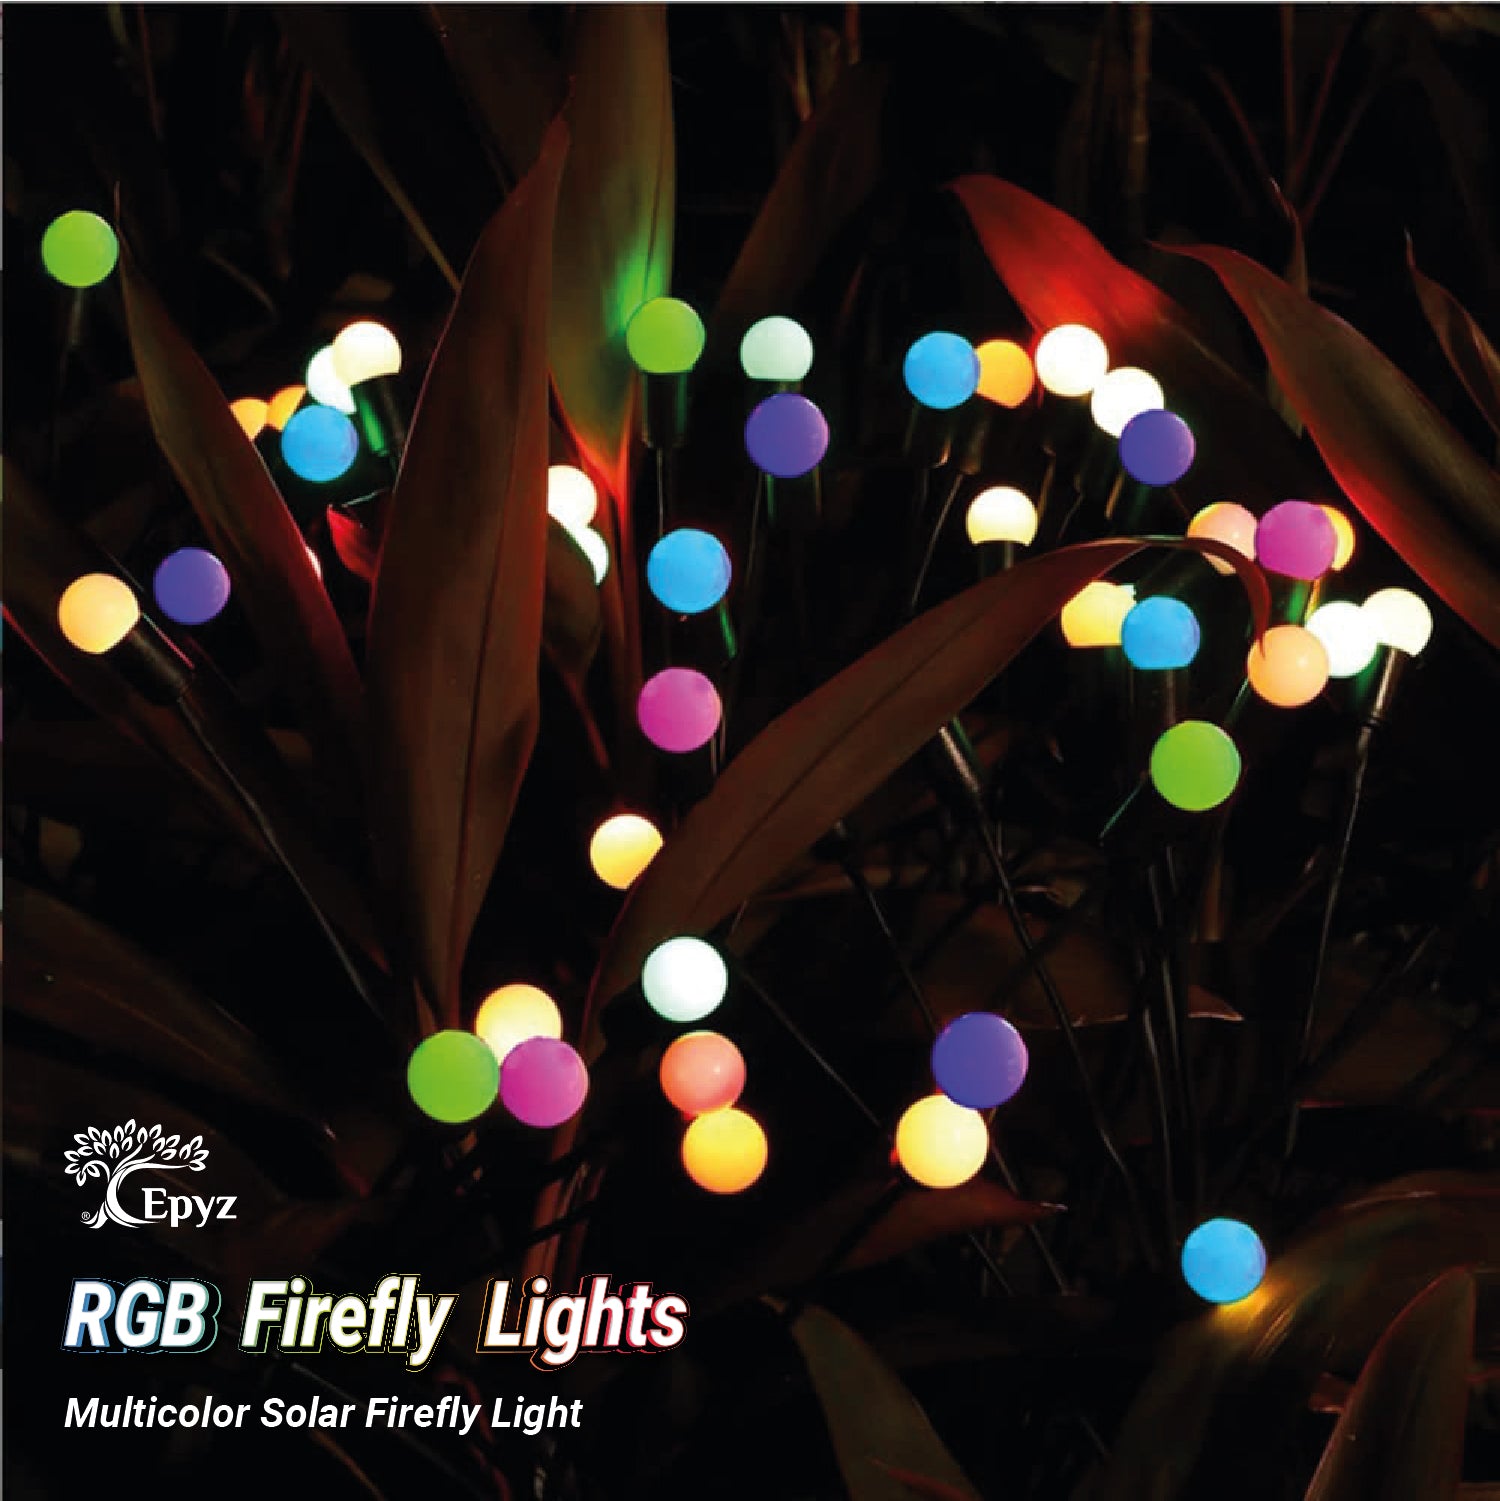 Firefly Lights | Solar Firefly Multicolor Lights